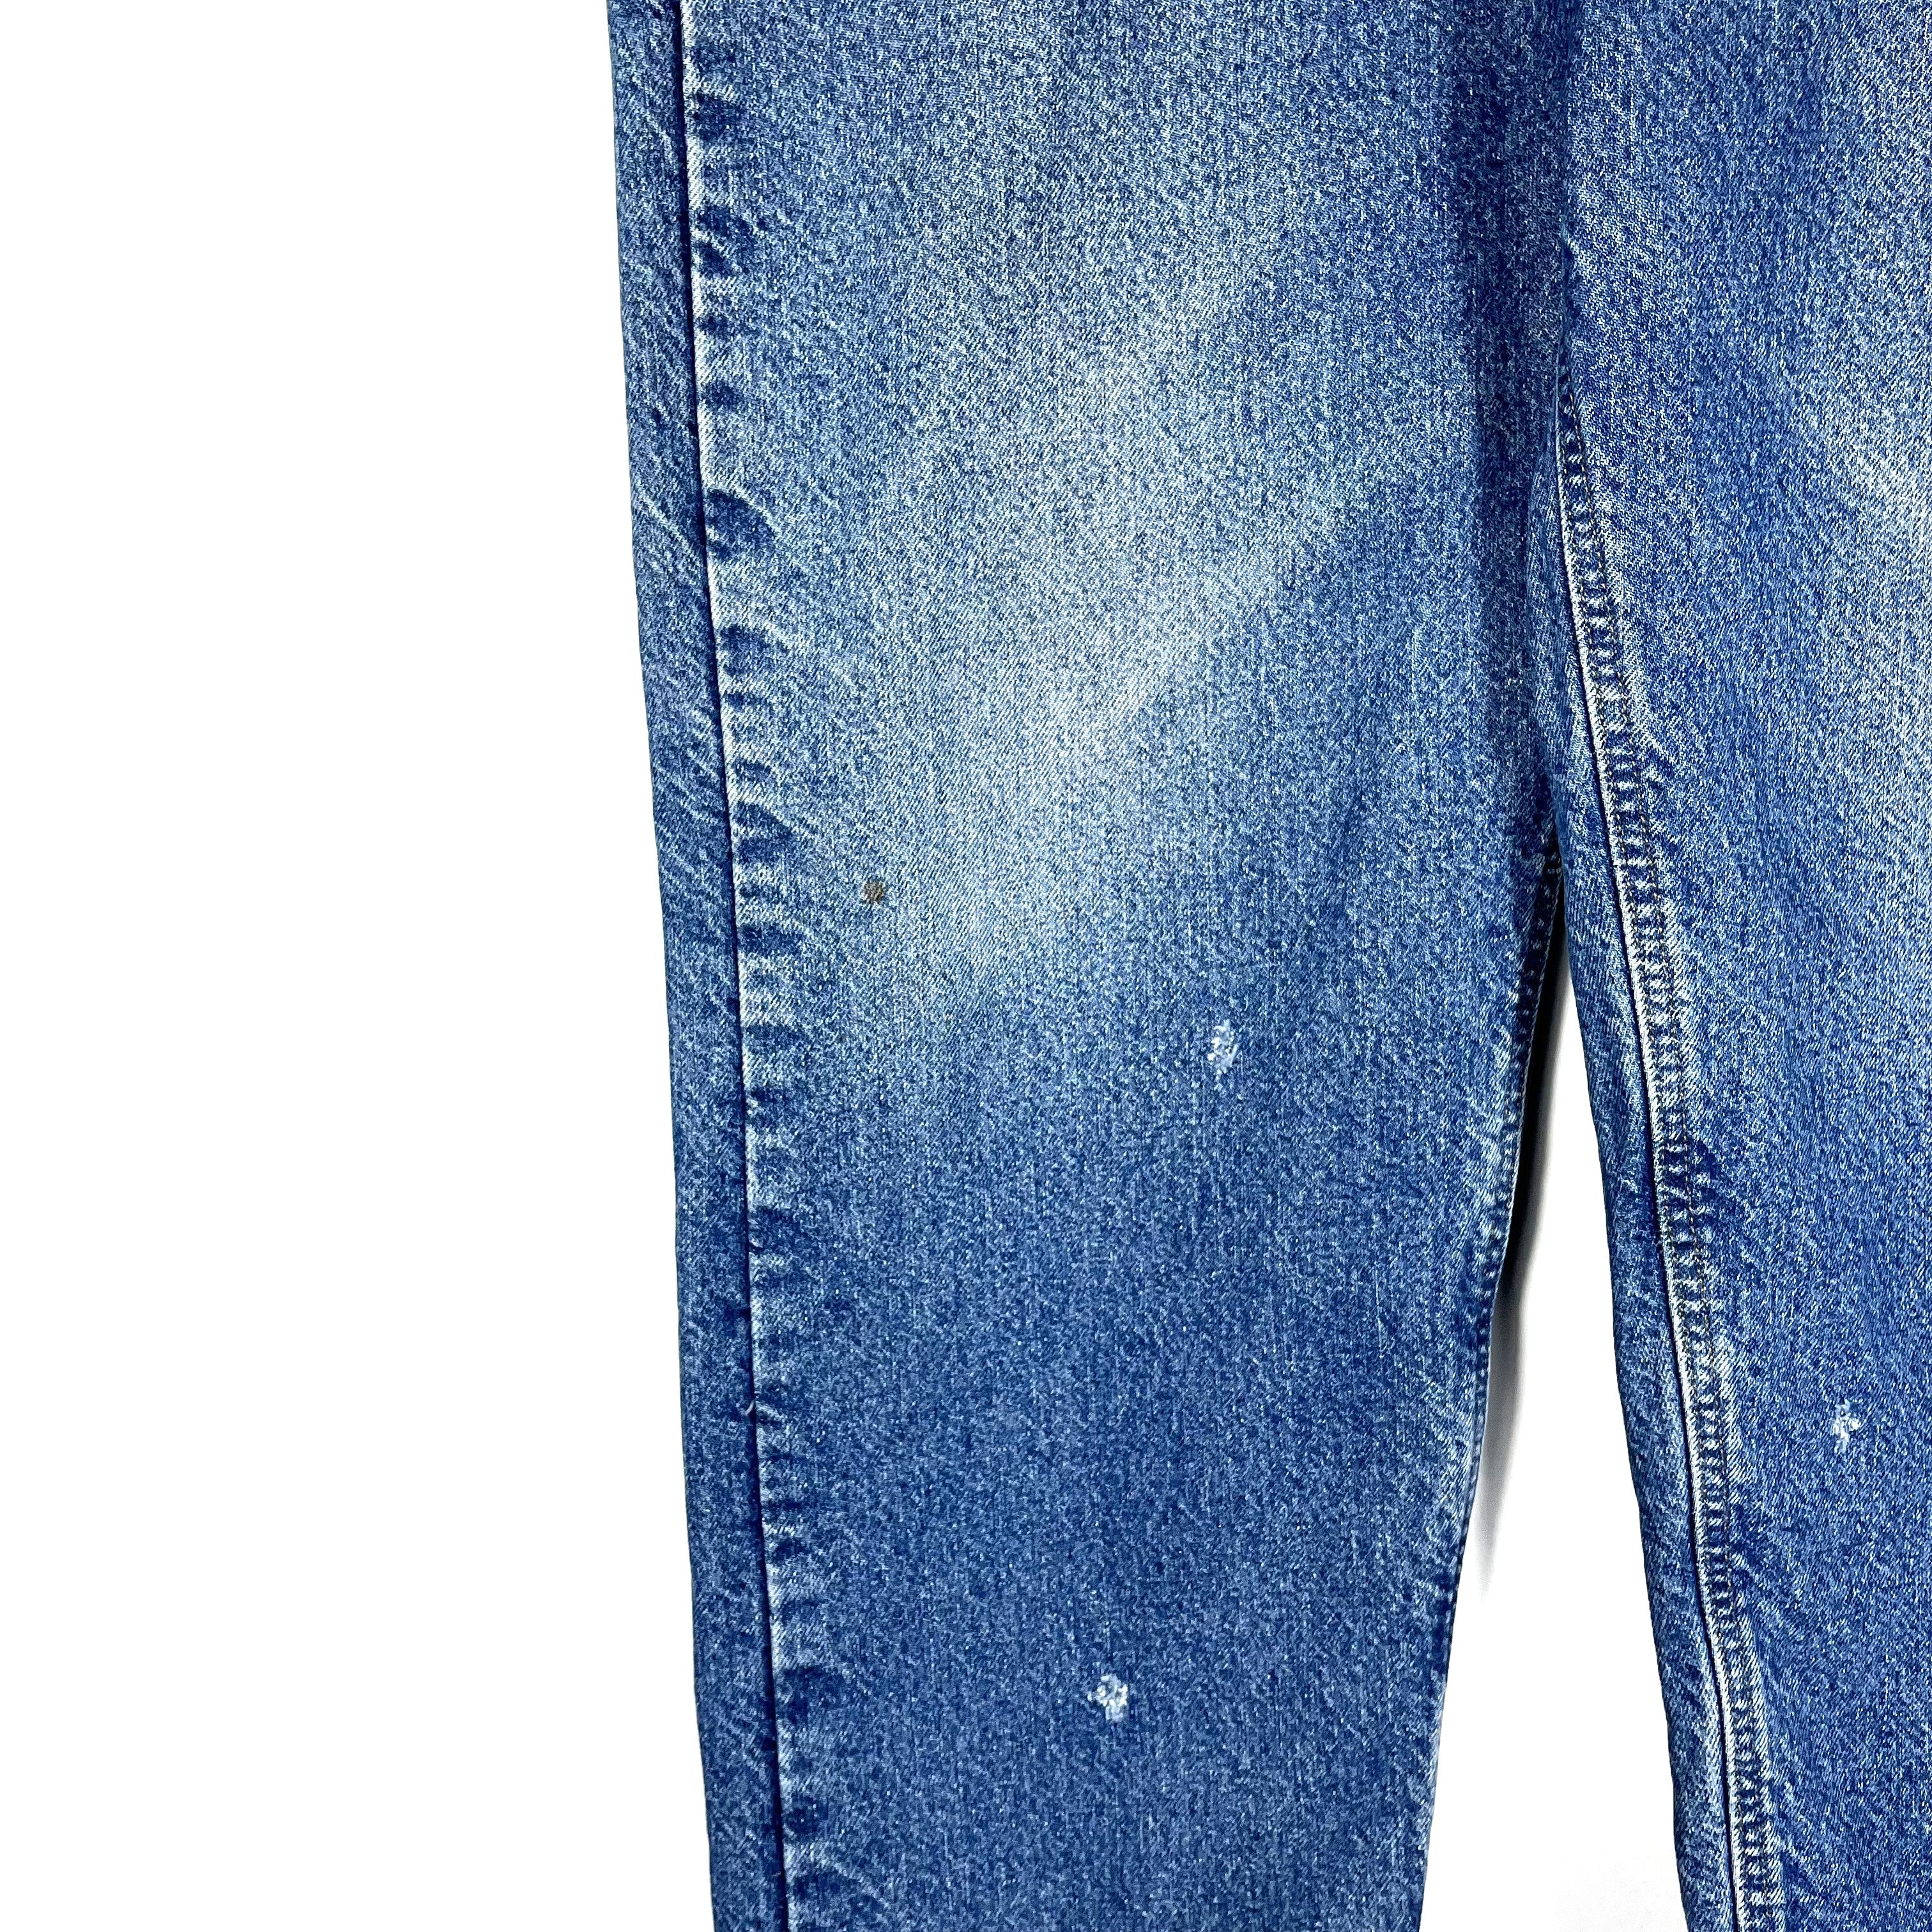 Vintage Carhartt Jeans - Men's 38/30